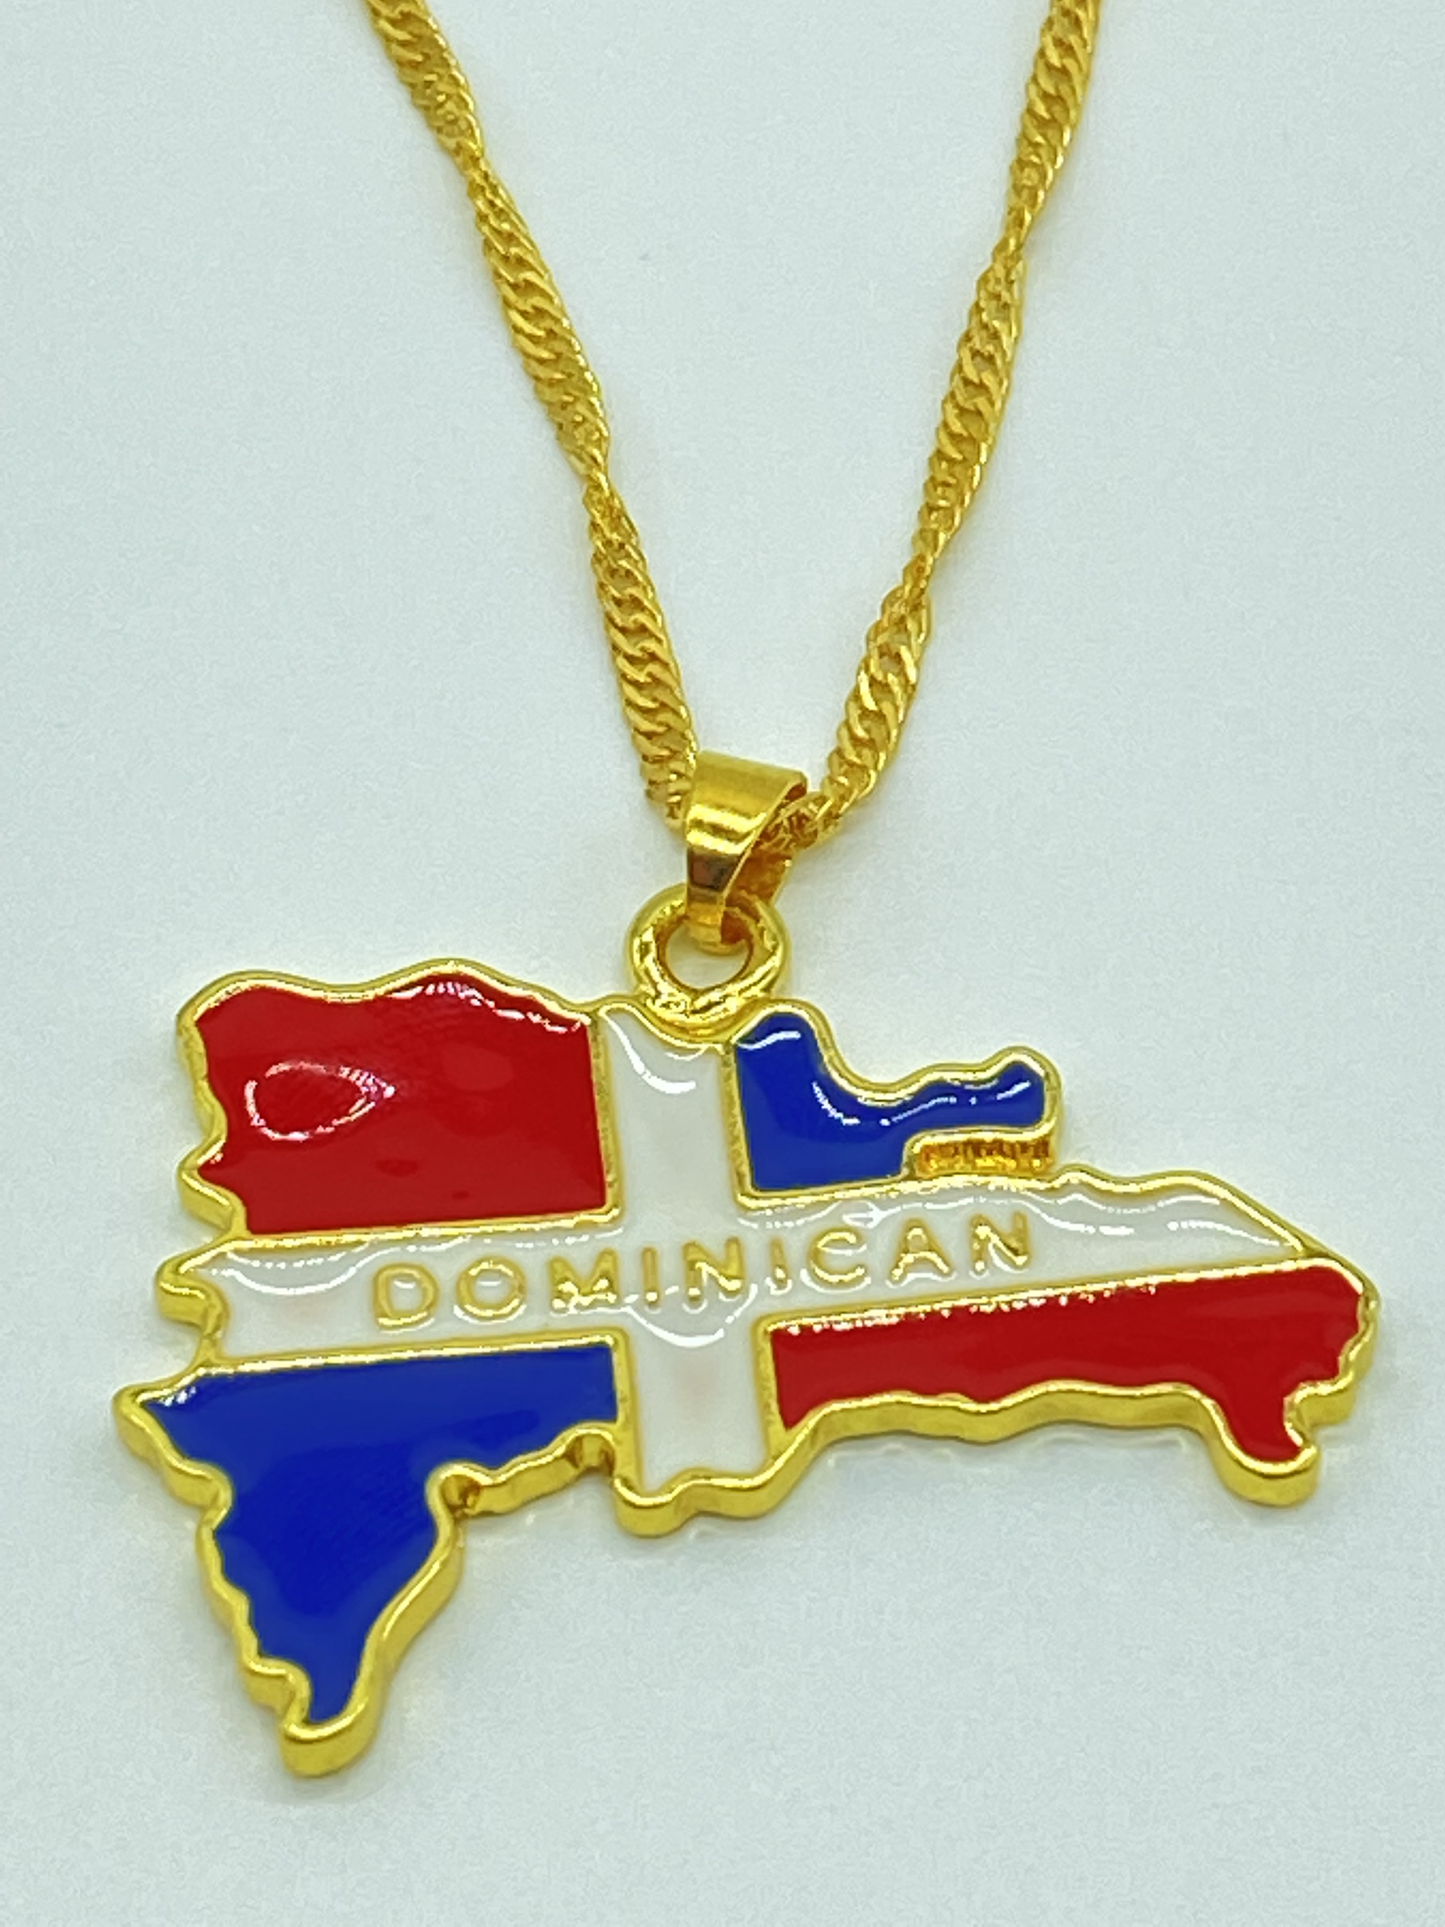 Dominican Republic Necklace